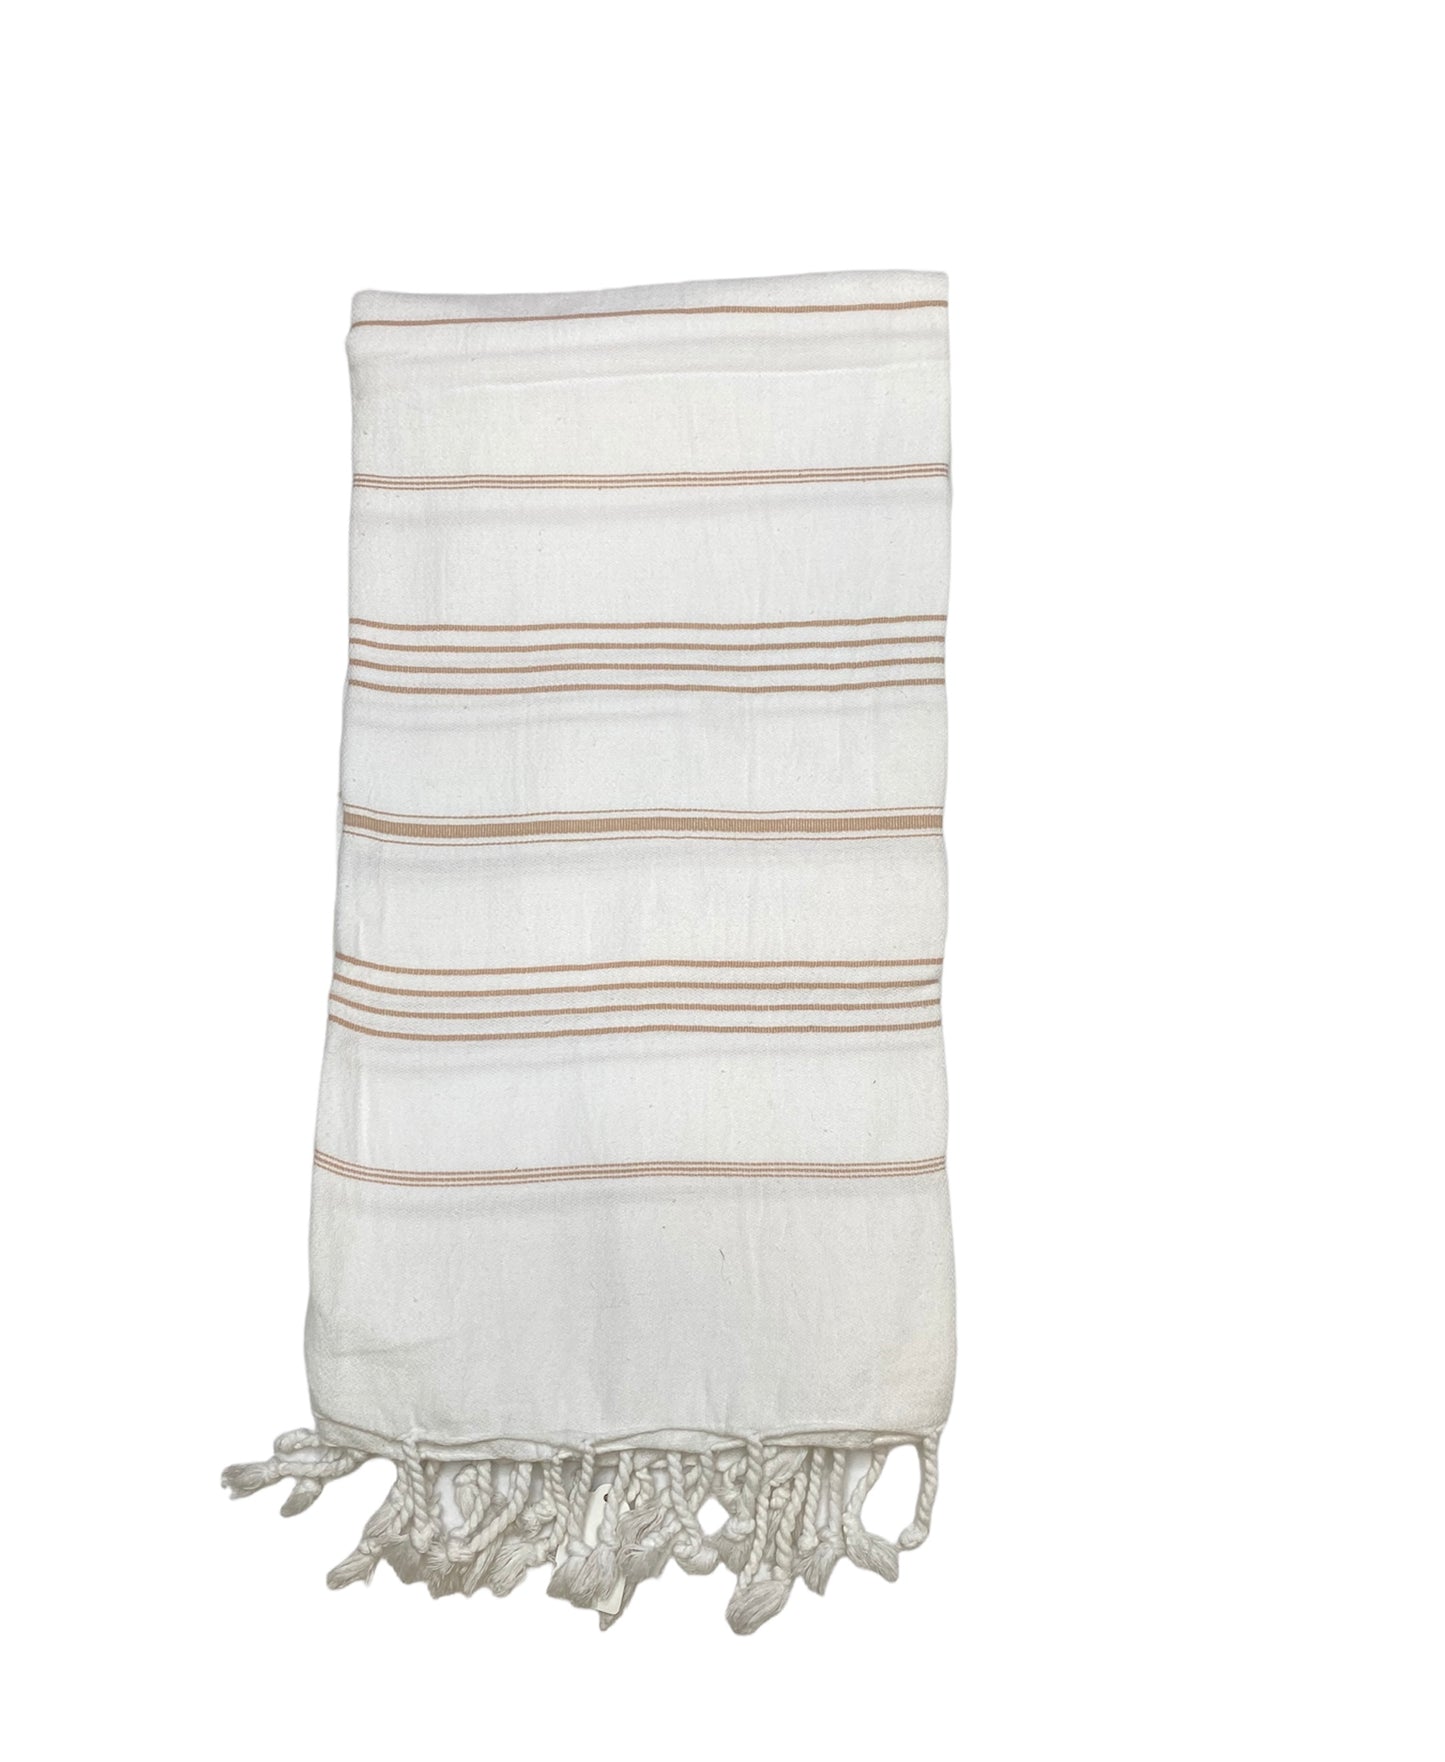 Cream and Tan Striped Turkish Towel/Throw